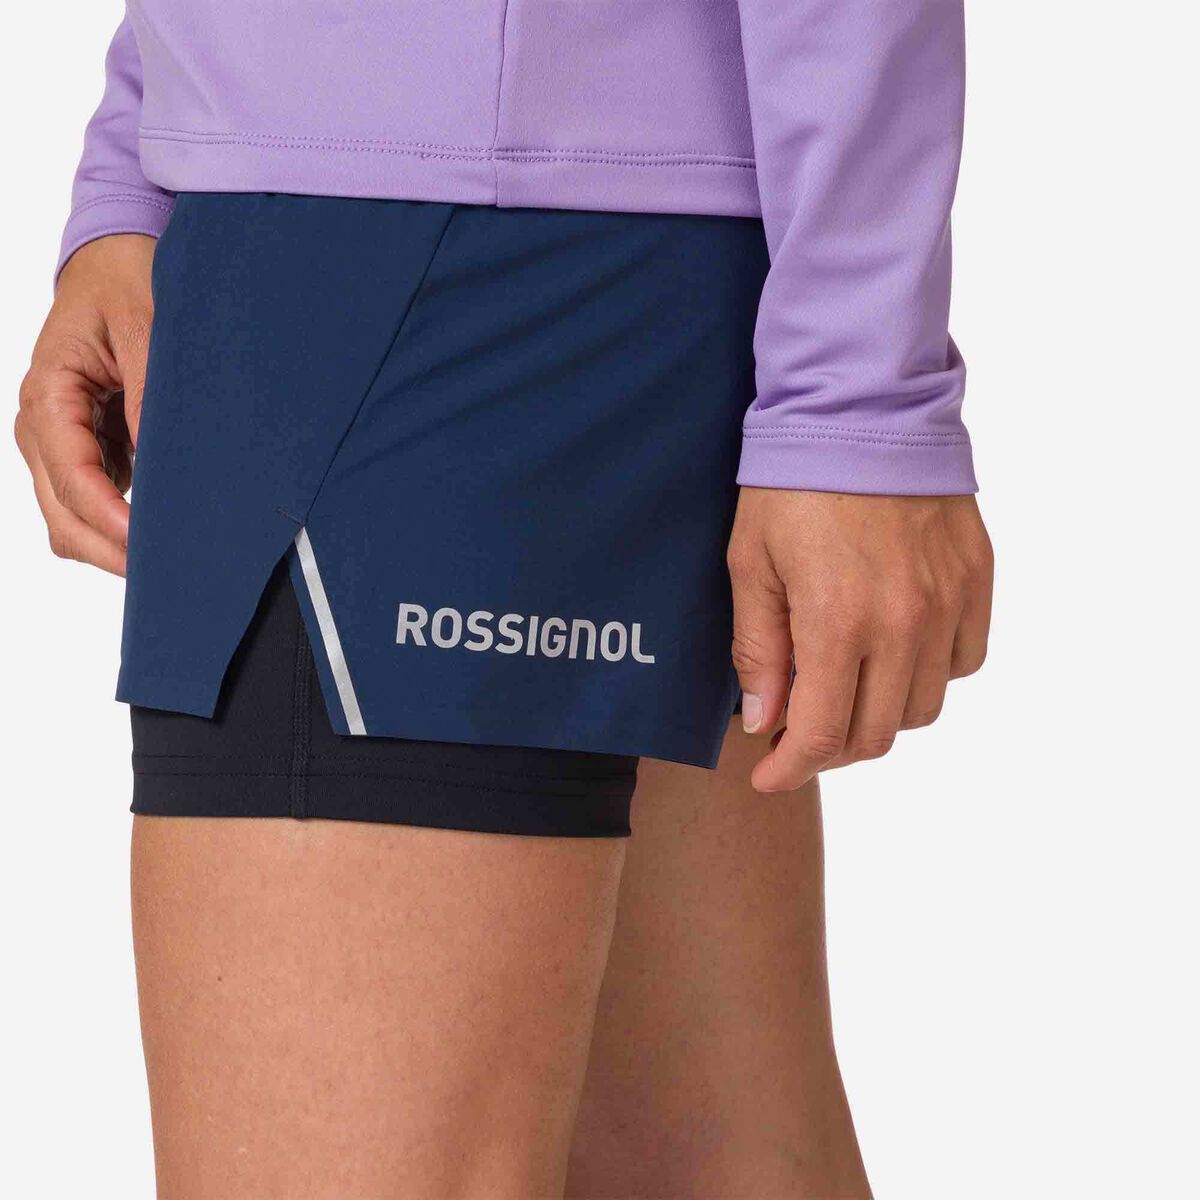 Rossignol Women's Trail Running Shorts, Trousers Women